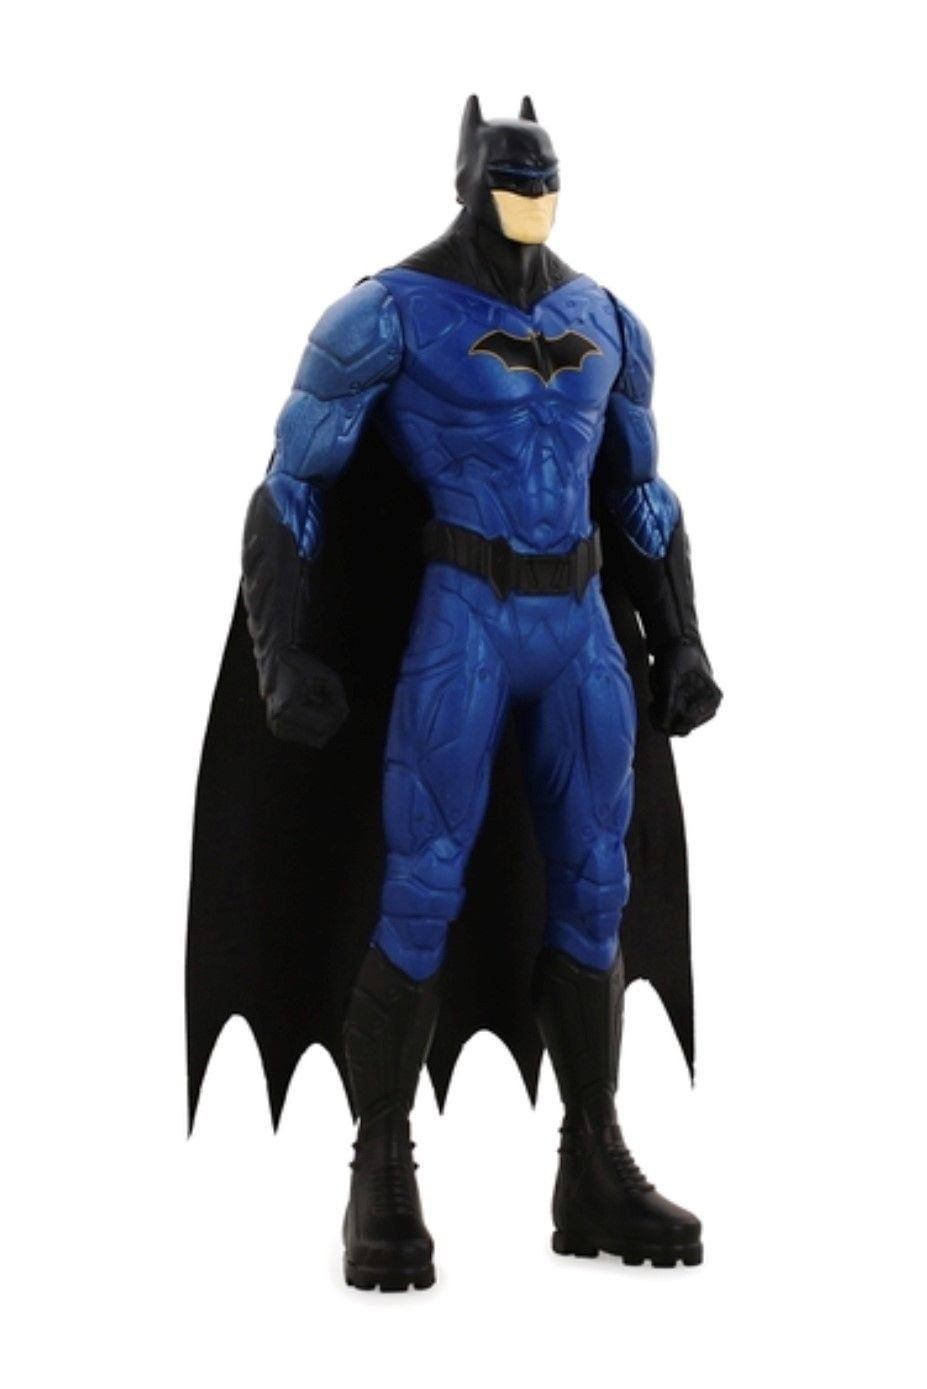 DC Comics Metal Tech Batman 6 Inch Action Figure for Children Ages 3 and up  